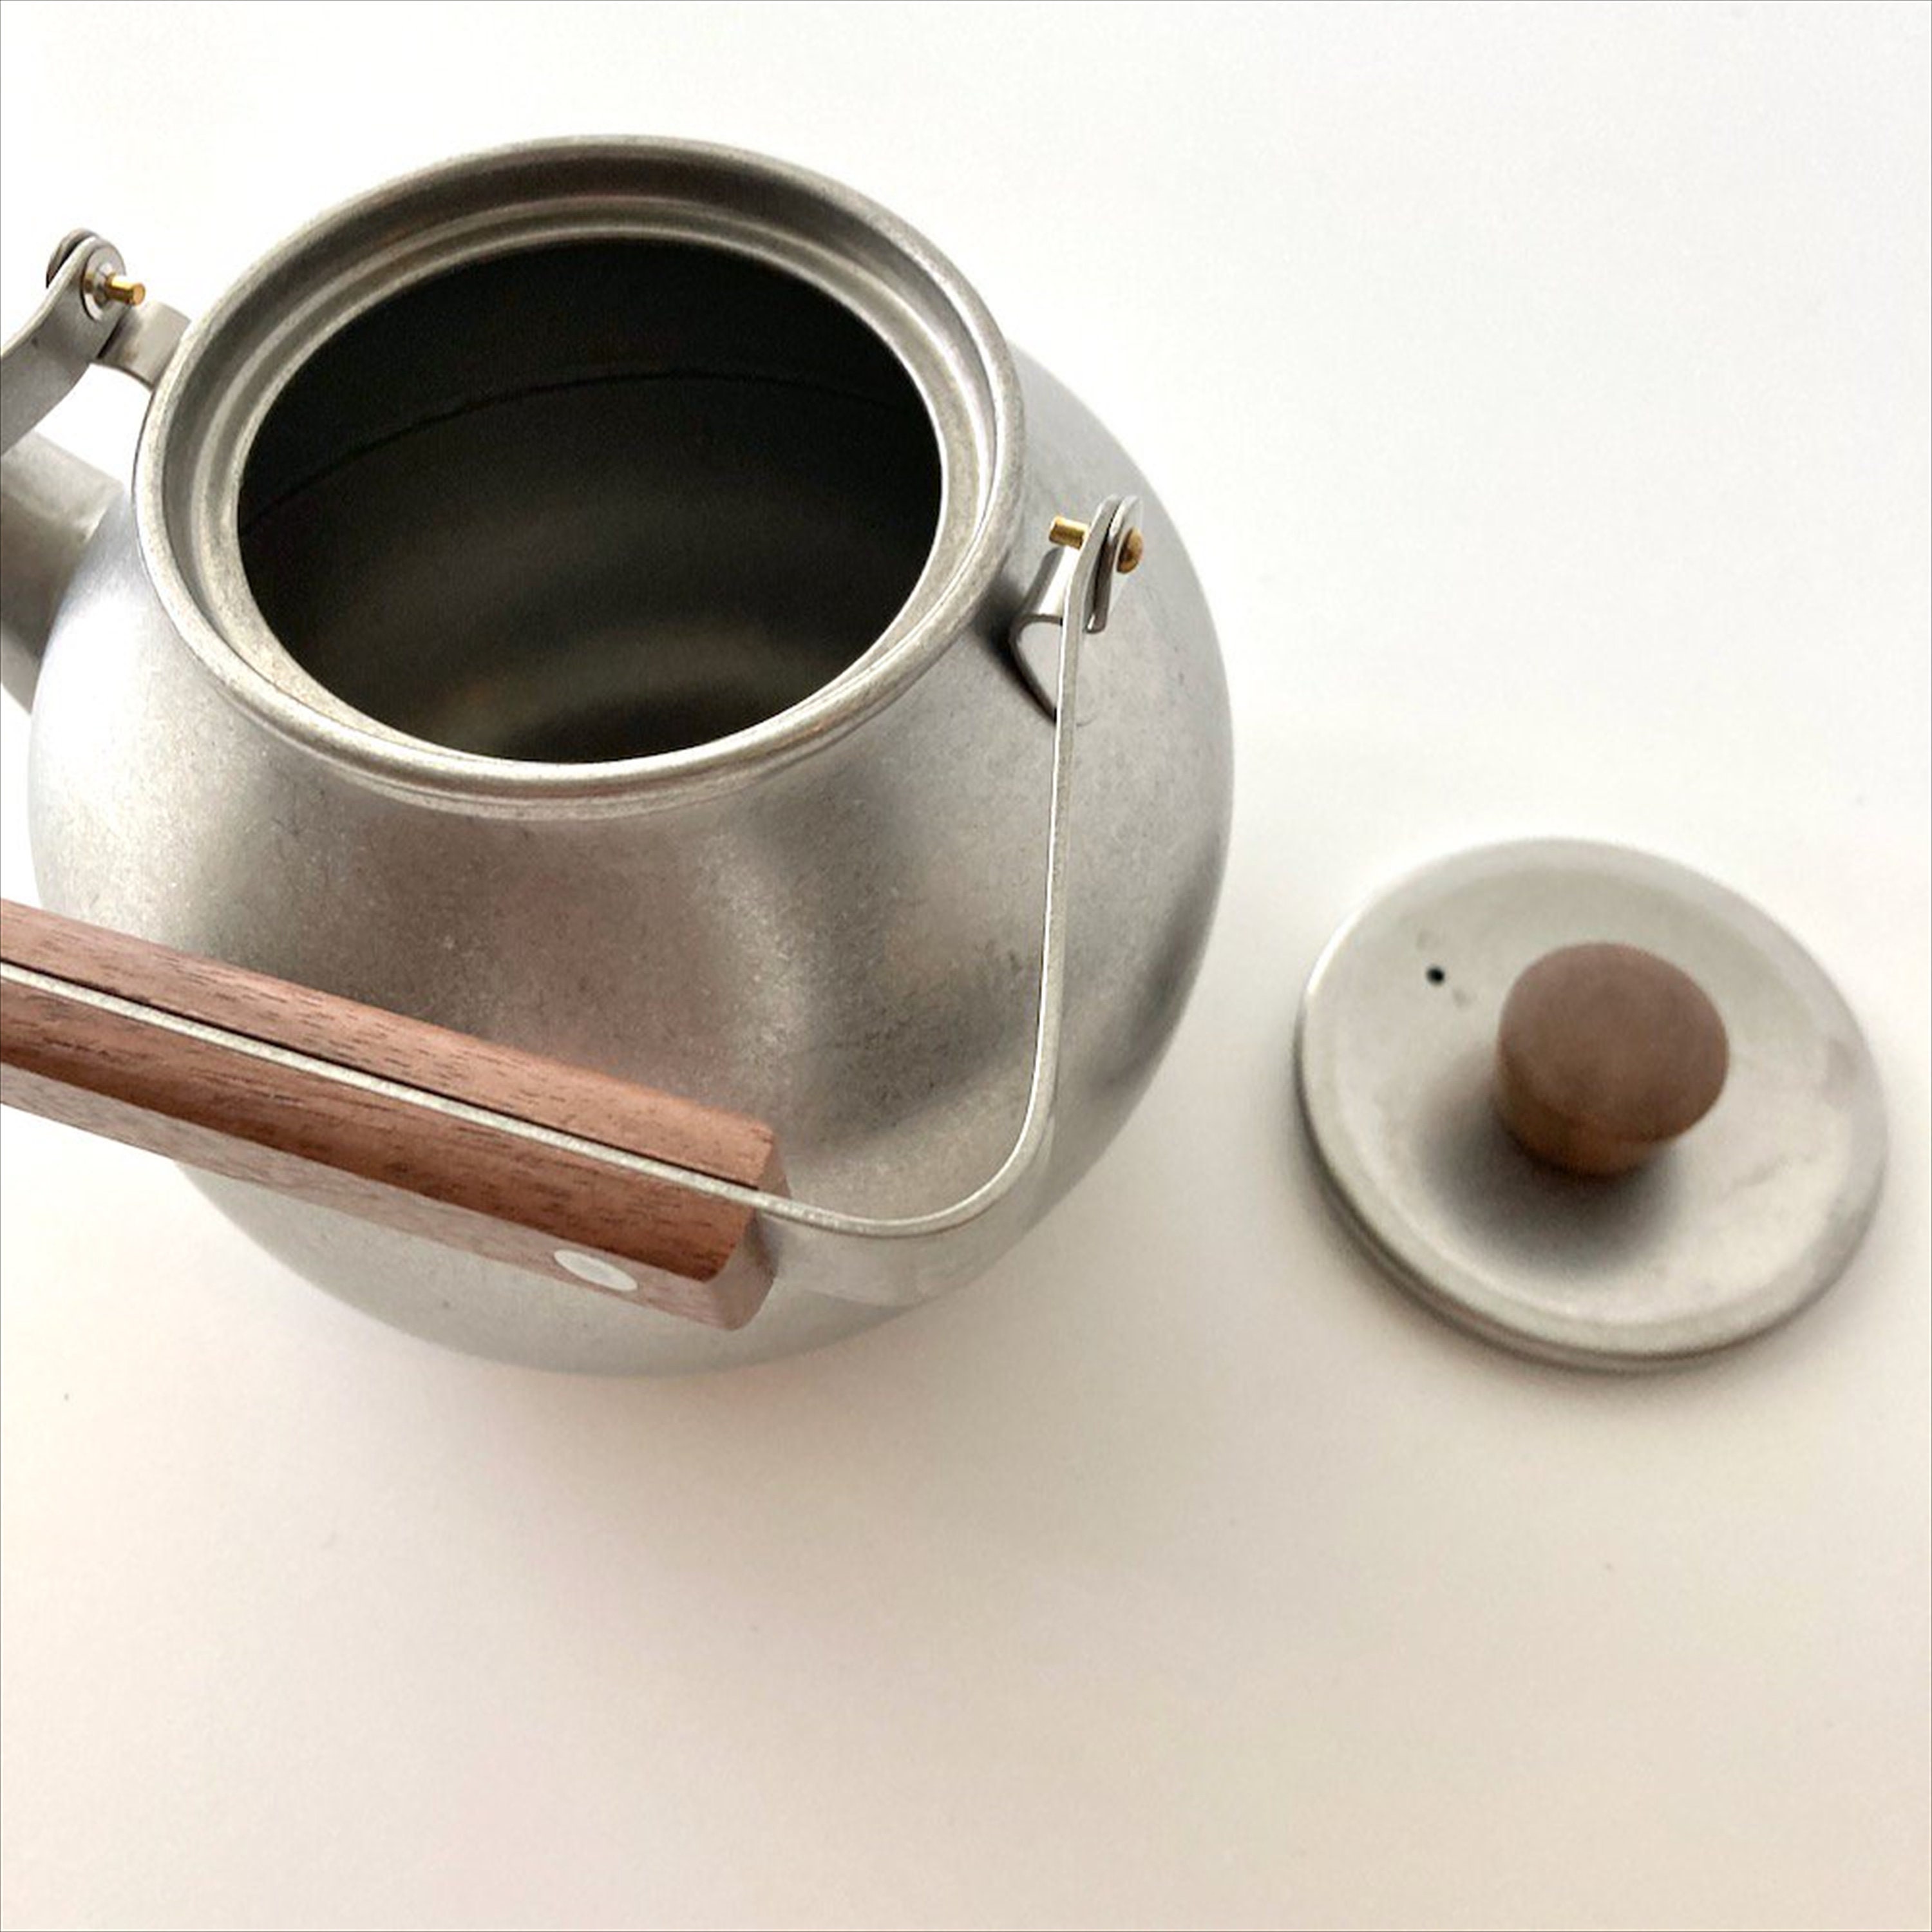 Japanese Stainless Steel Teapot Handmade Kyusu Made in Japan 0.7L 